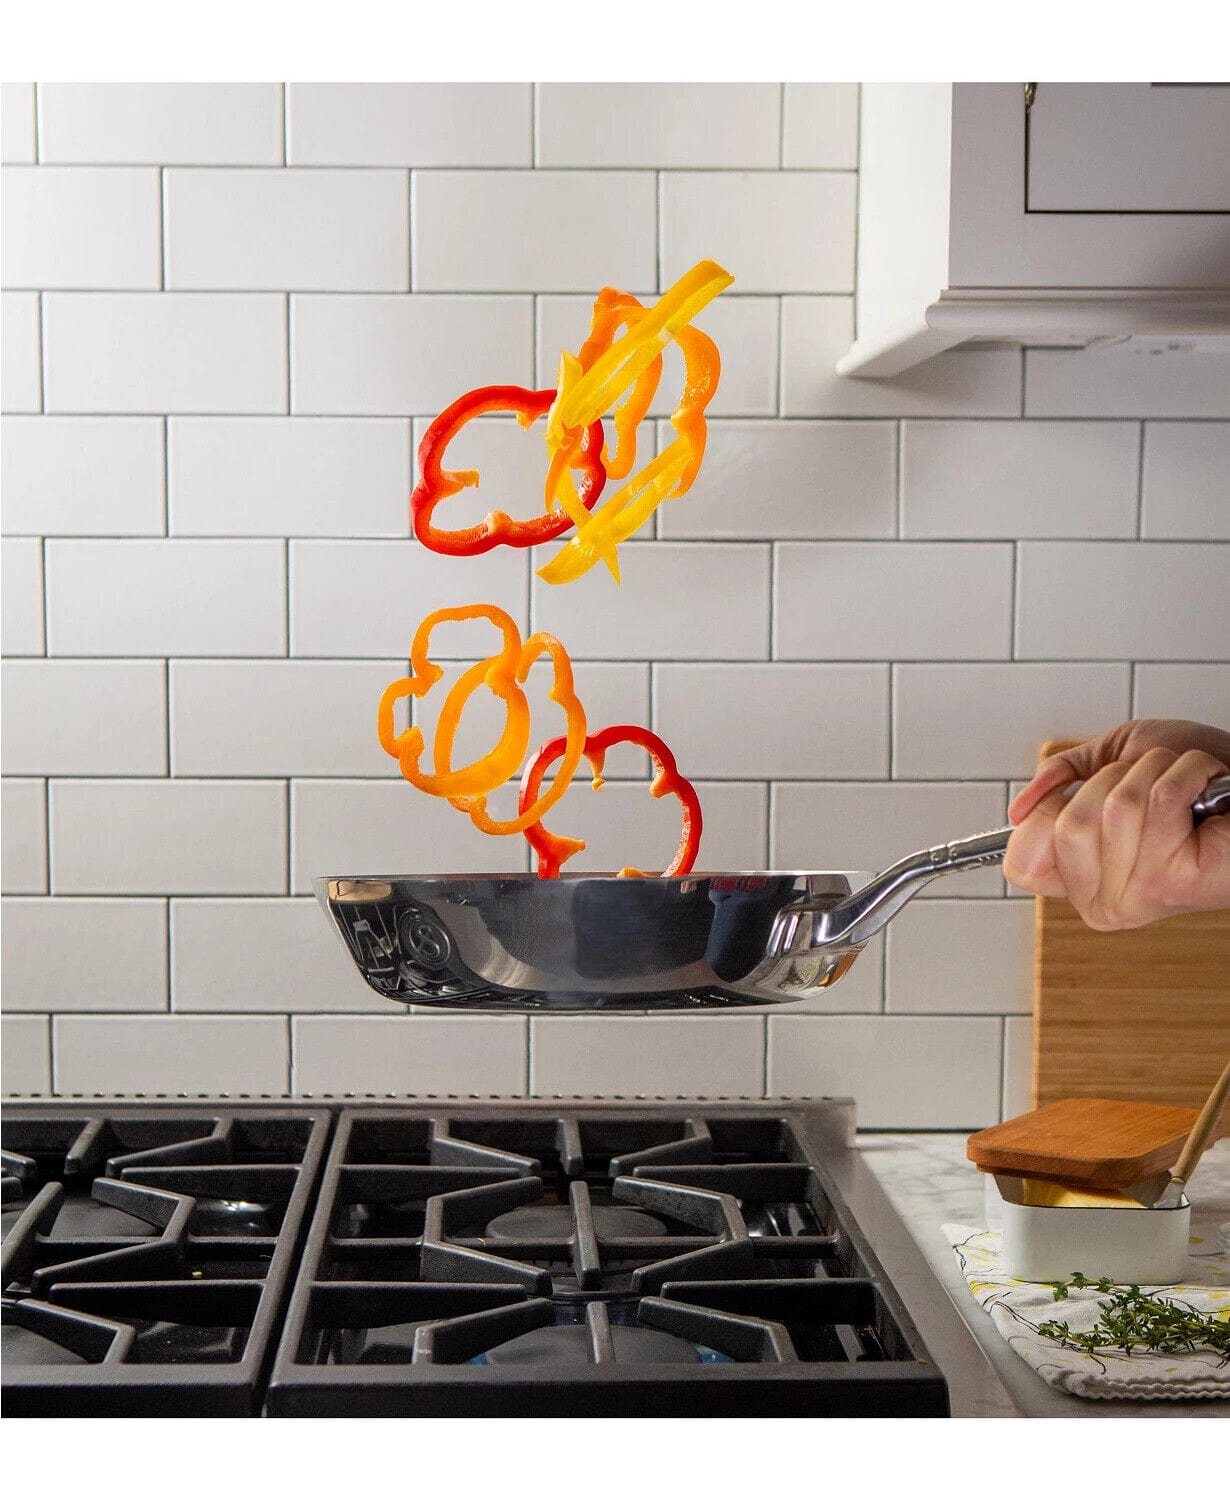 SAVEUR Kitchenware SAVEUR - Stainless Steel Voyage Series Tri-Ply Cookware Set 7-Pc